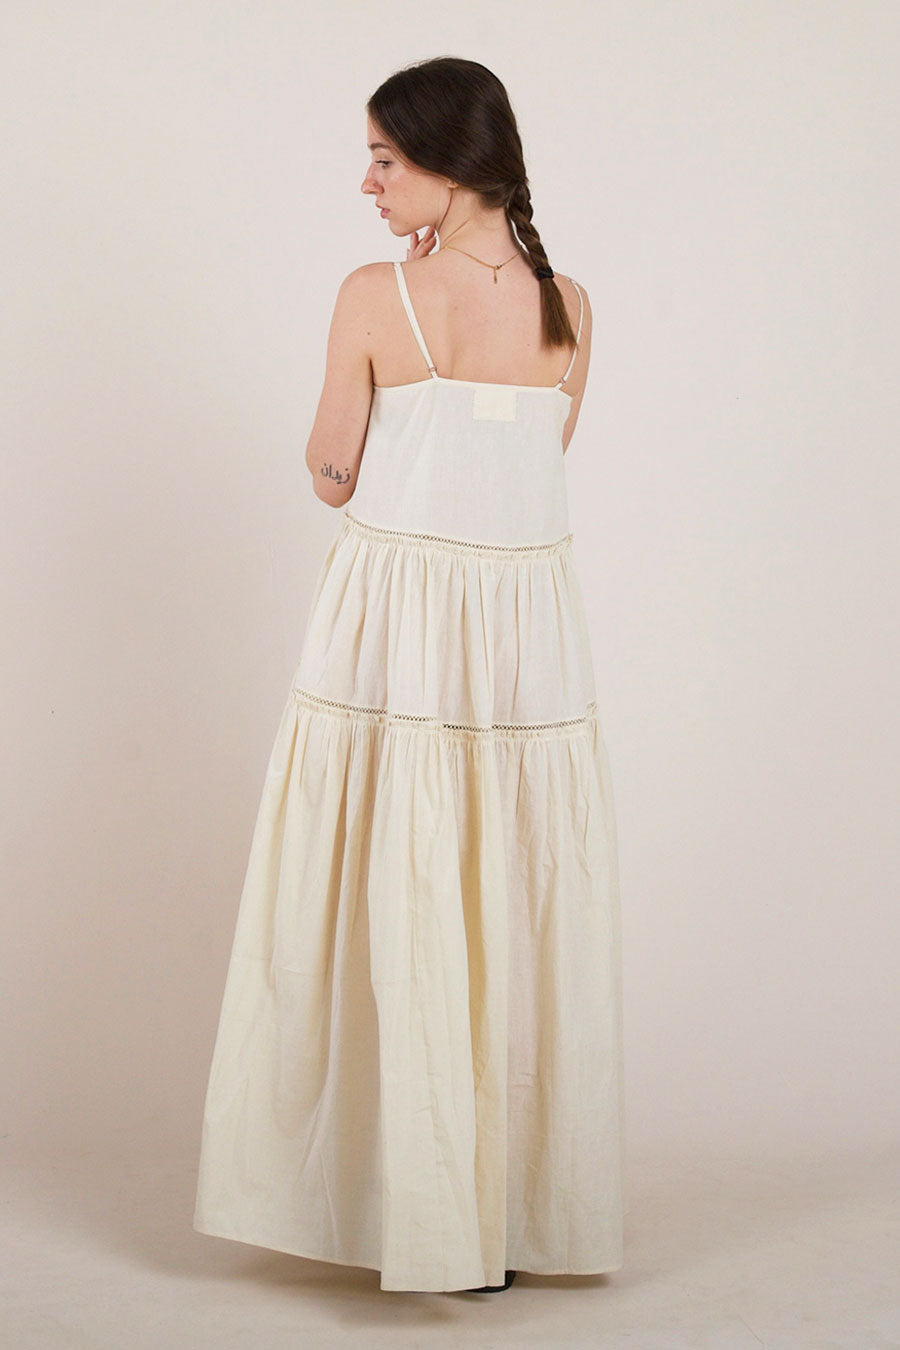 Off-White Cotton Tier Dress